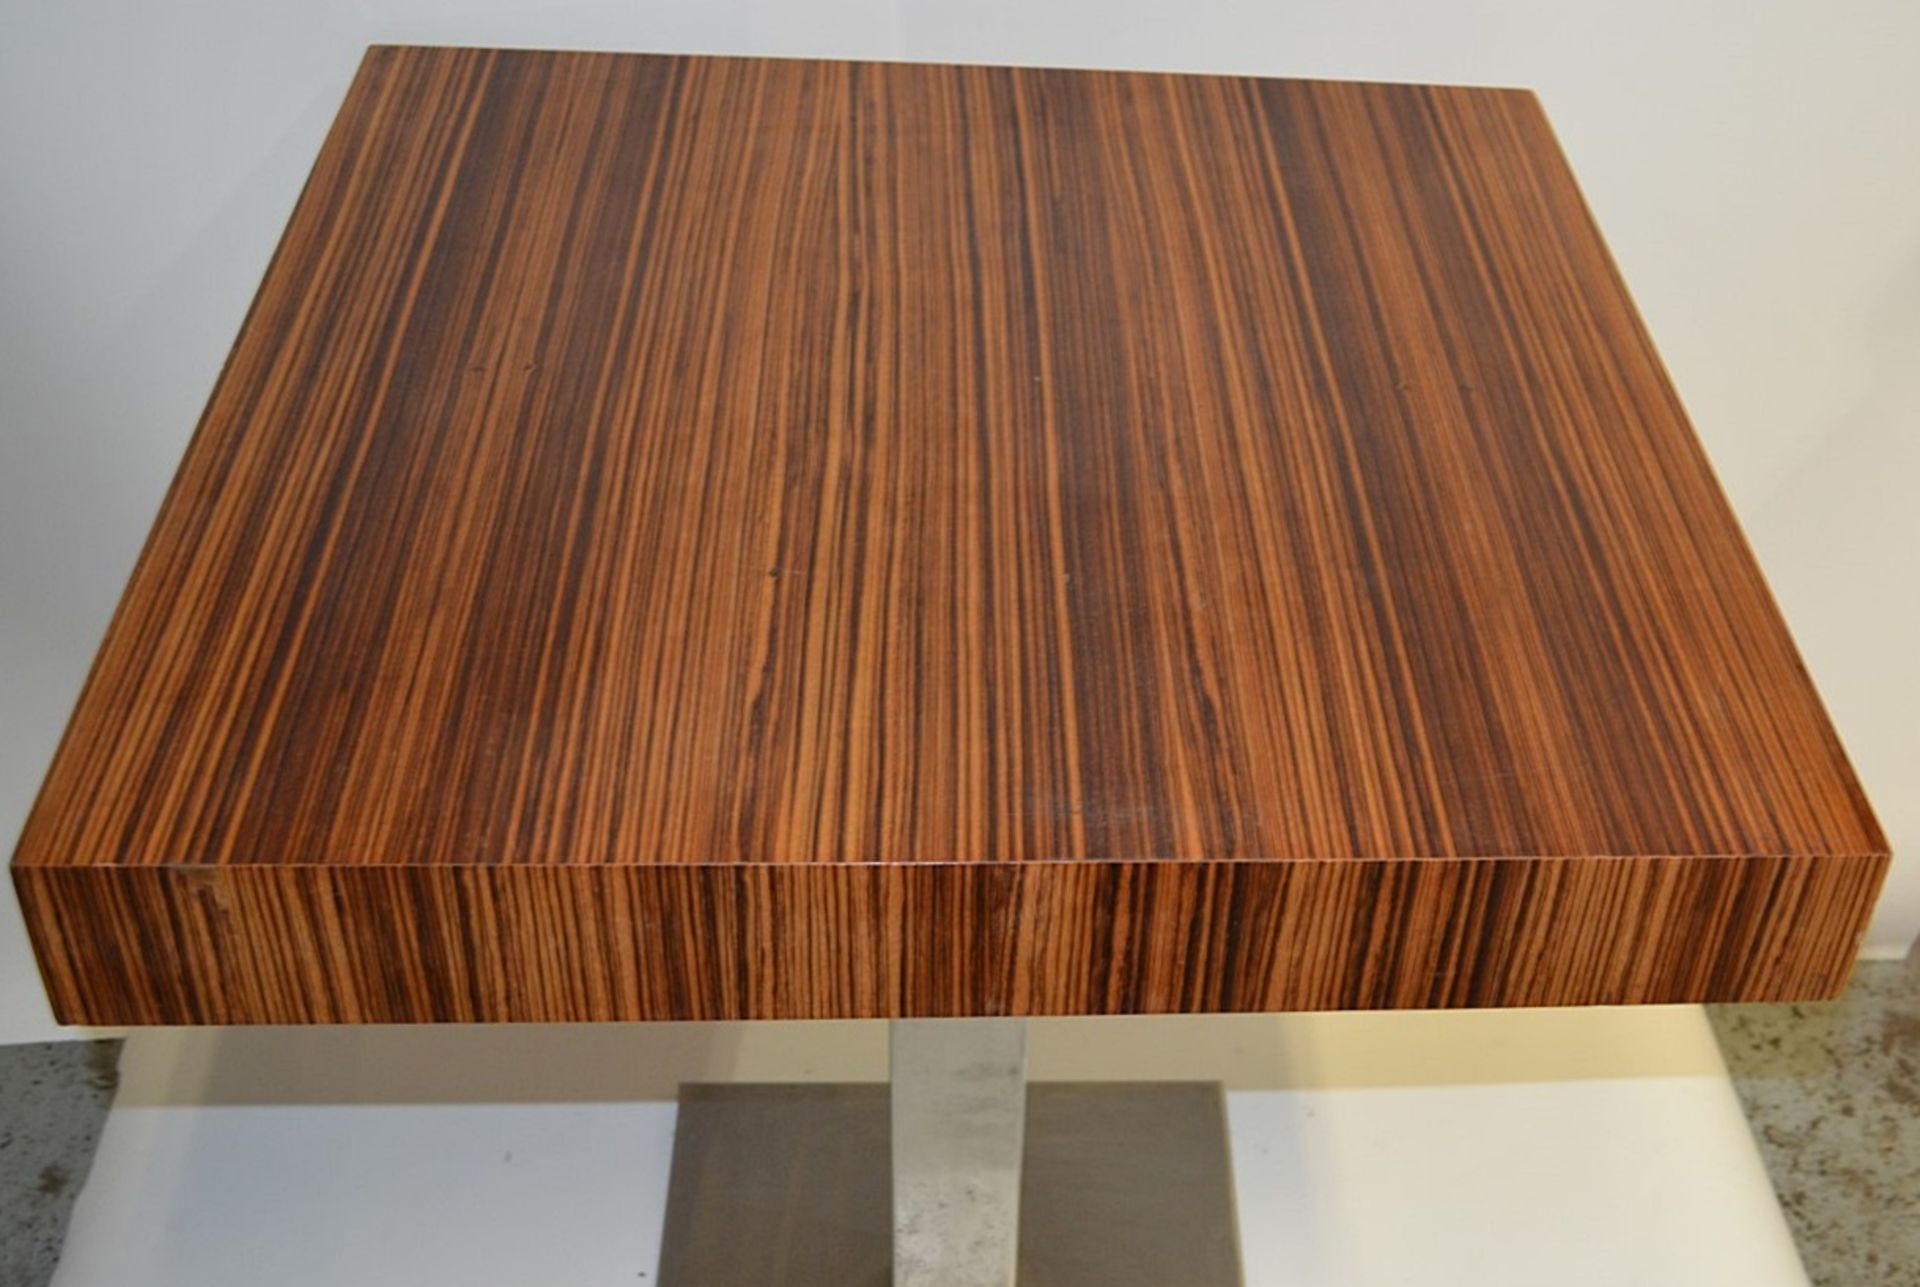 4 x Square Bistro Tables - Dimensions: H76 x W70 x D70cm - City Centre Restaurant Closure - Supplied - Image 3 of 5